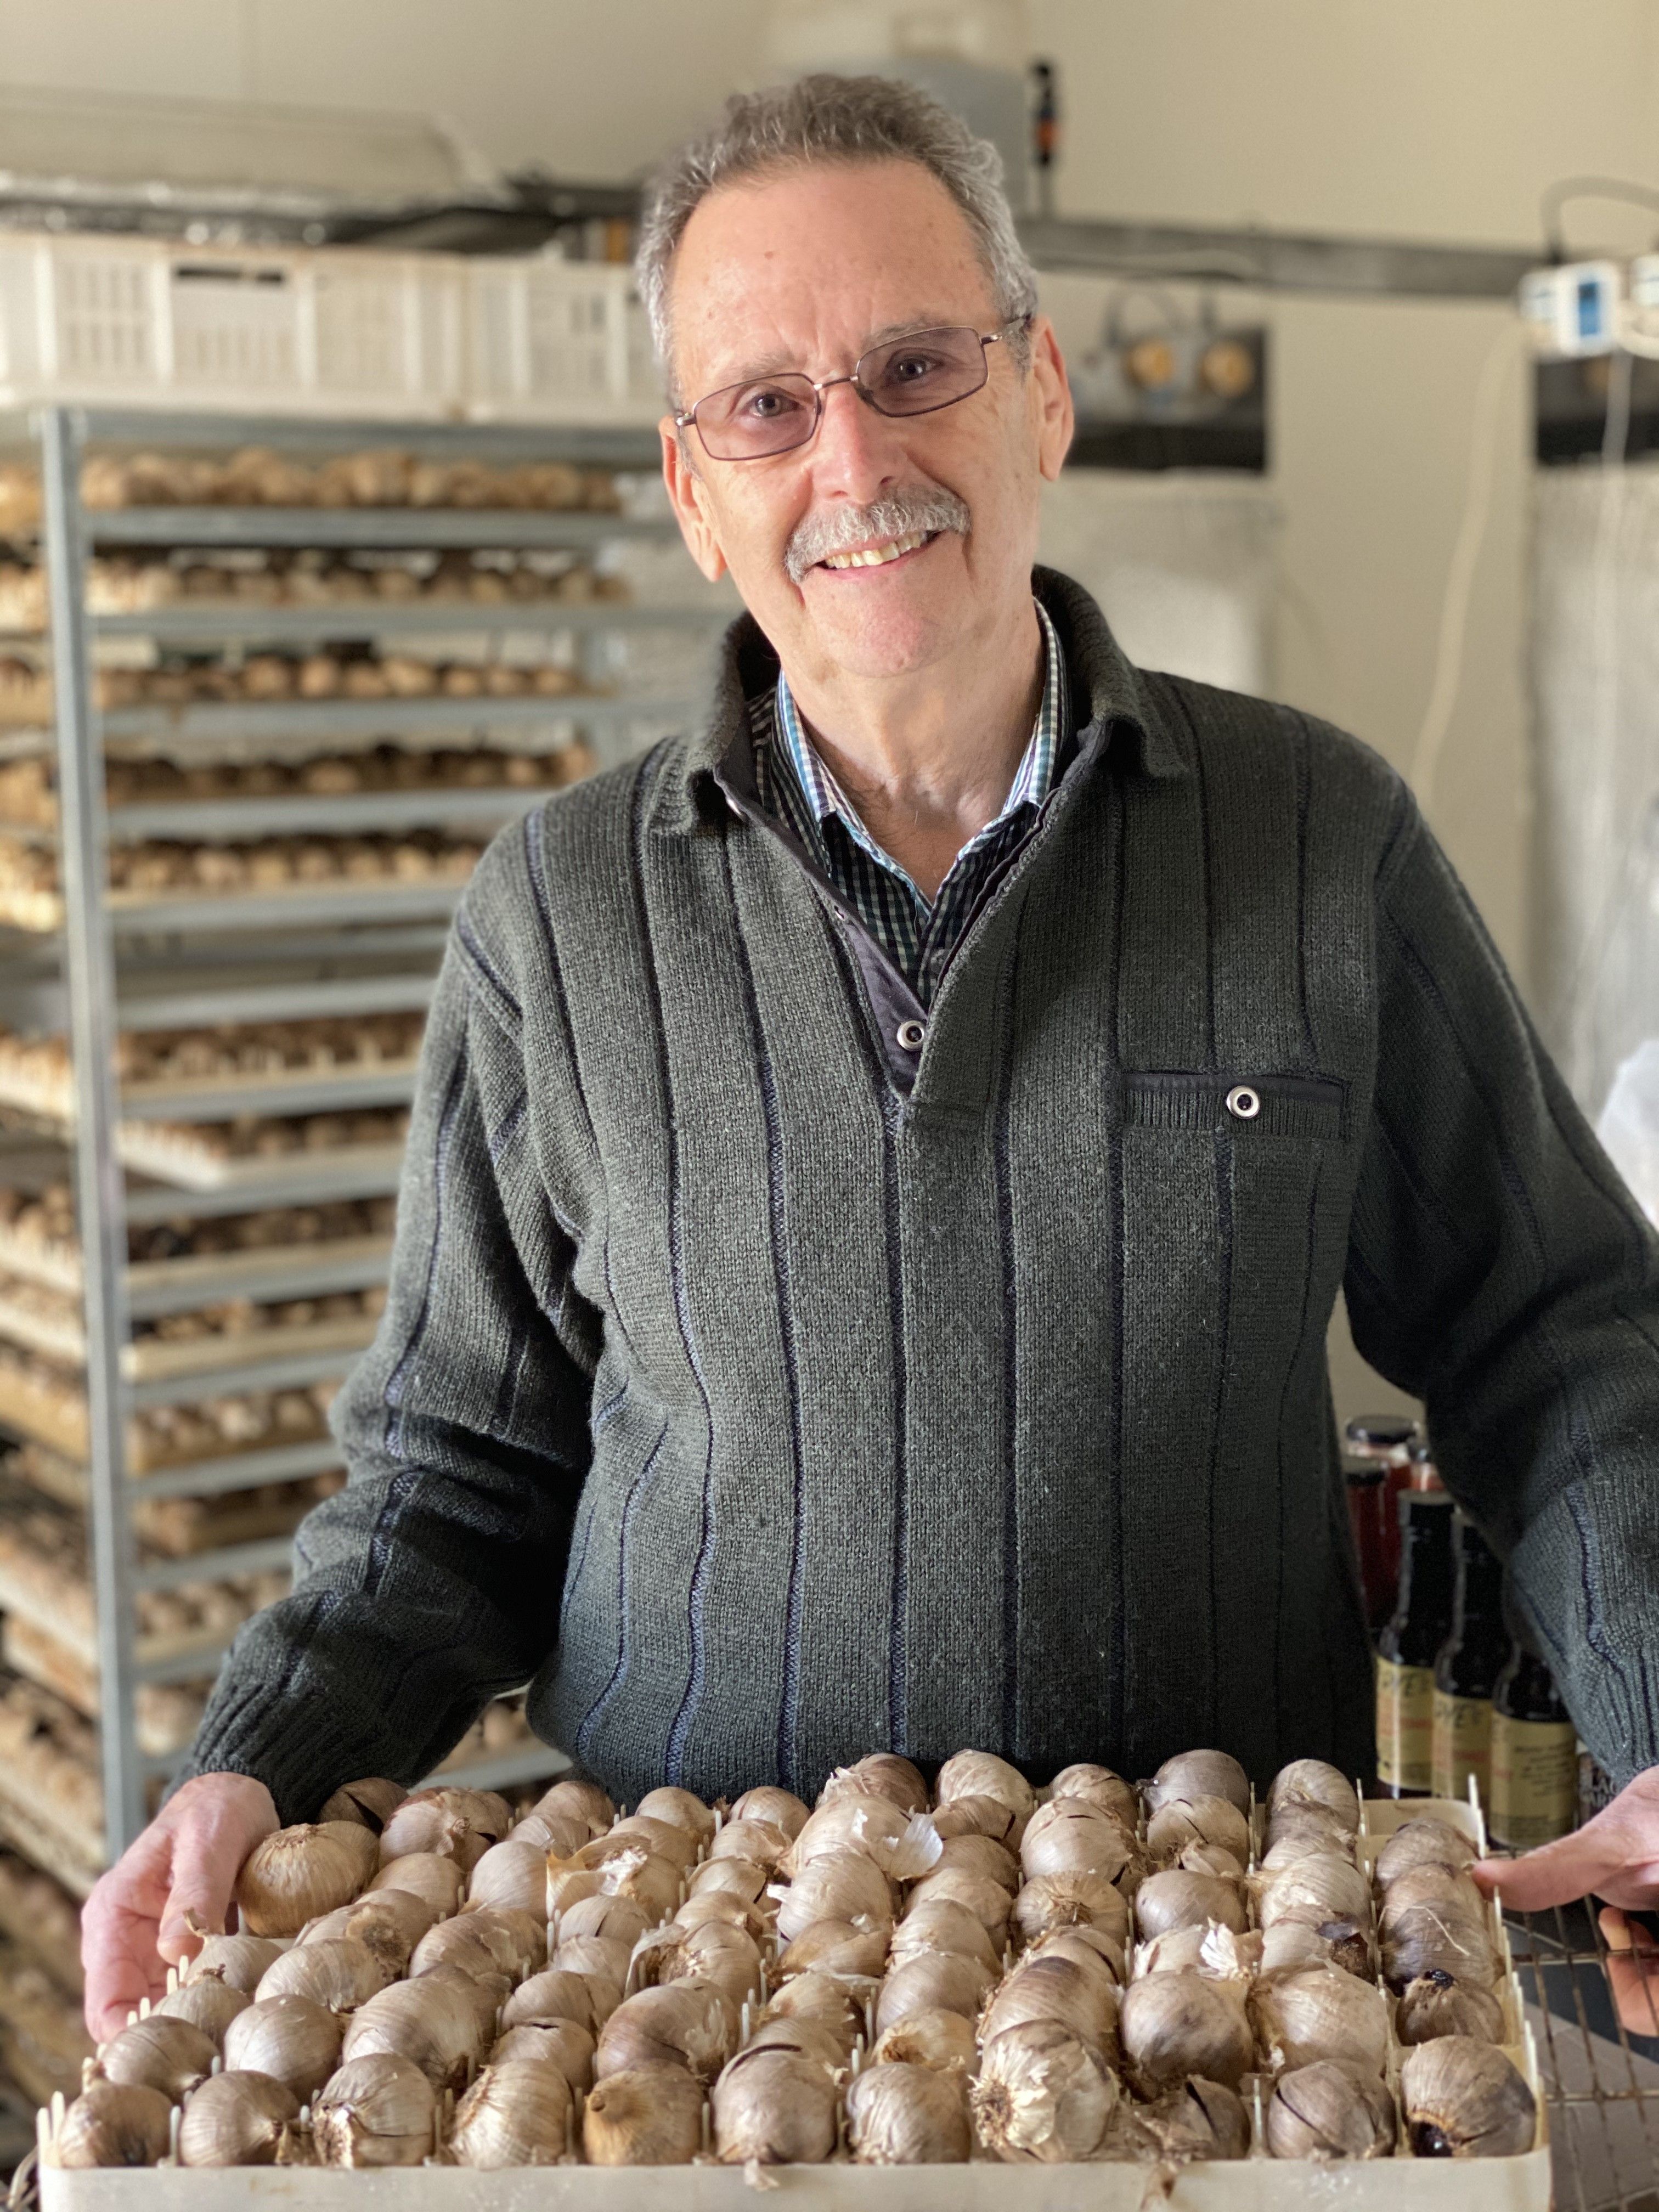 Meet the Makers: black garlic producer John Pye